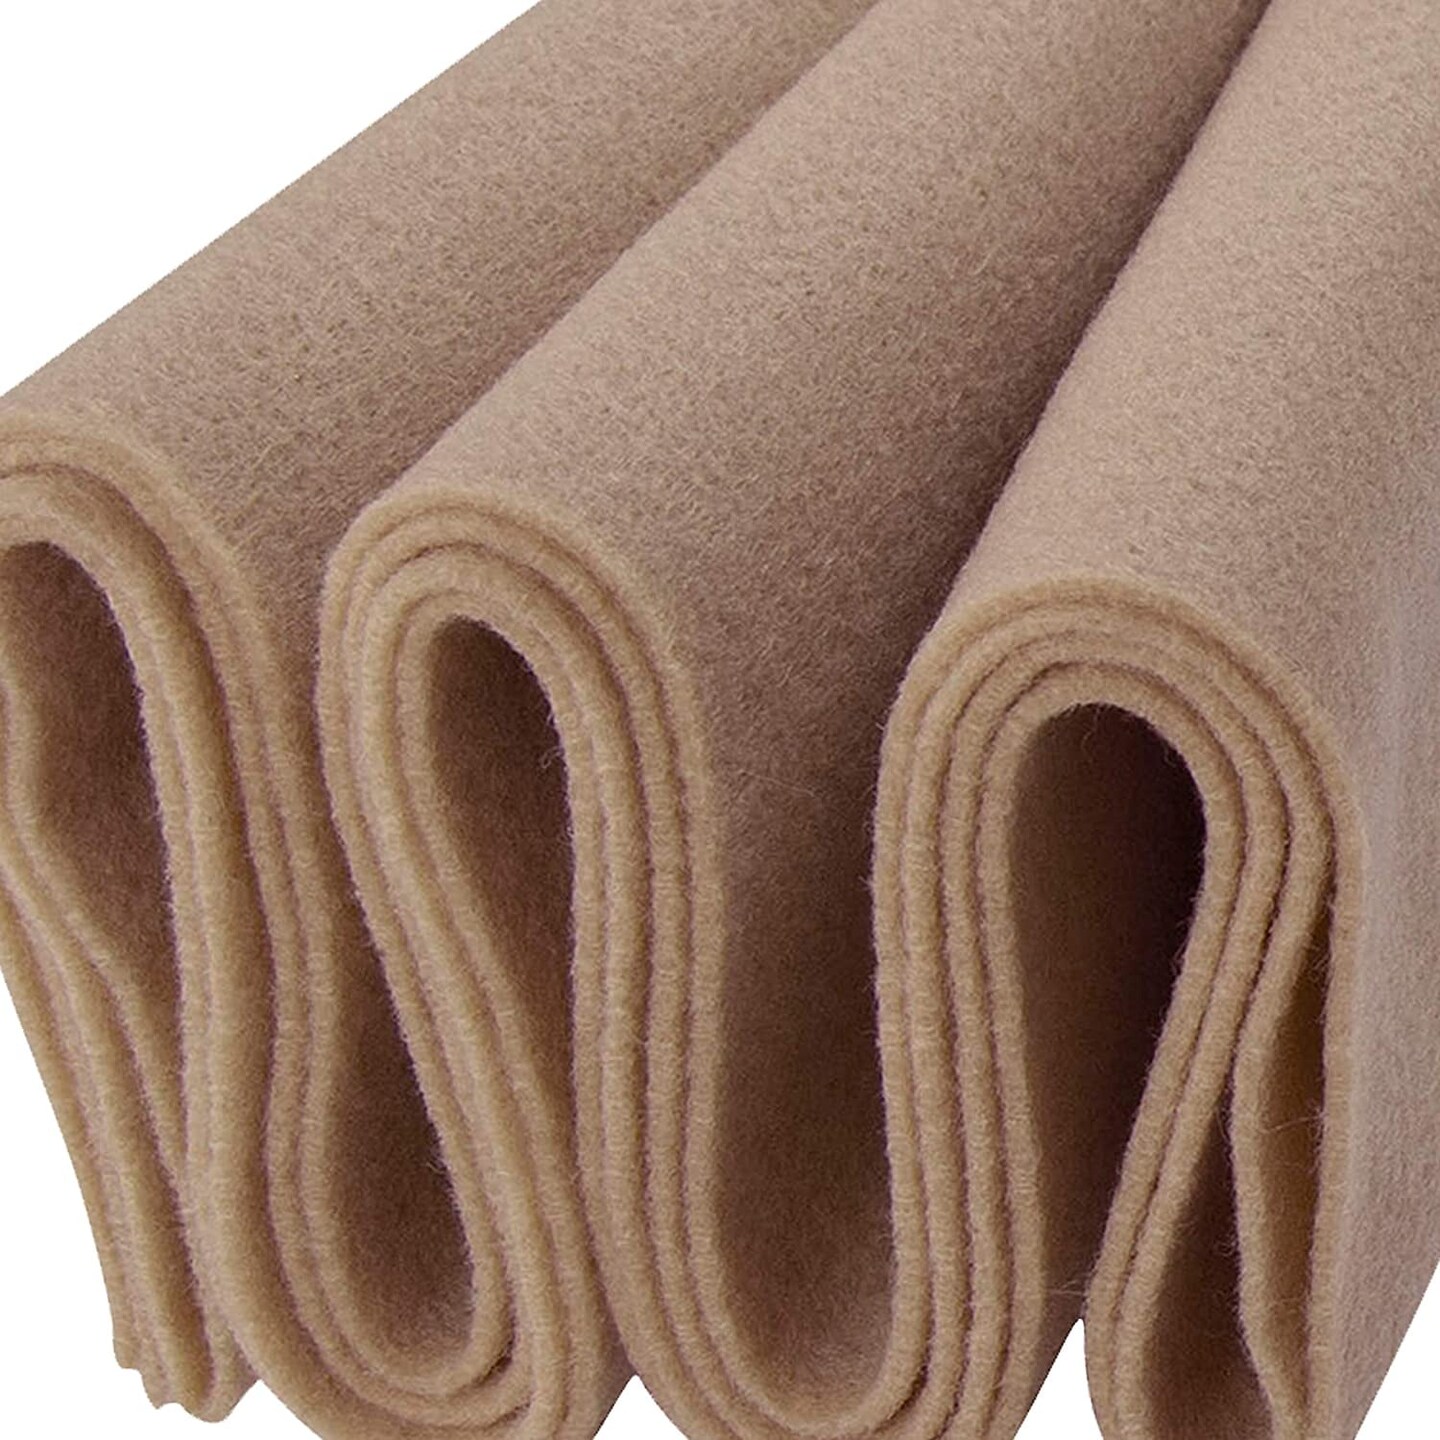 FabricLA Craft Felt Fabric - 18 X 18 Inch Wide & 1.6mm Thick Felt Fabric  - Sandy A048 - Use This Soft Felt for Crafts - Felt Material Pack